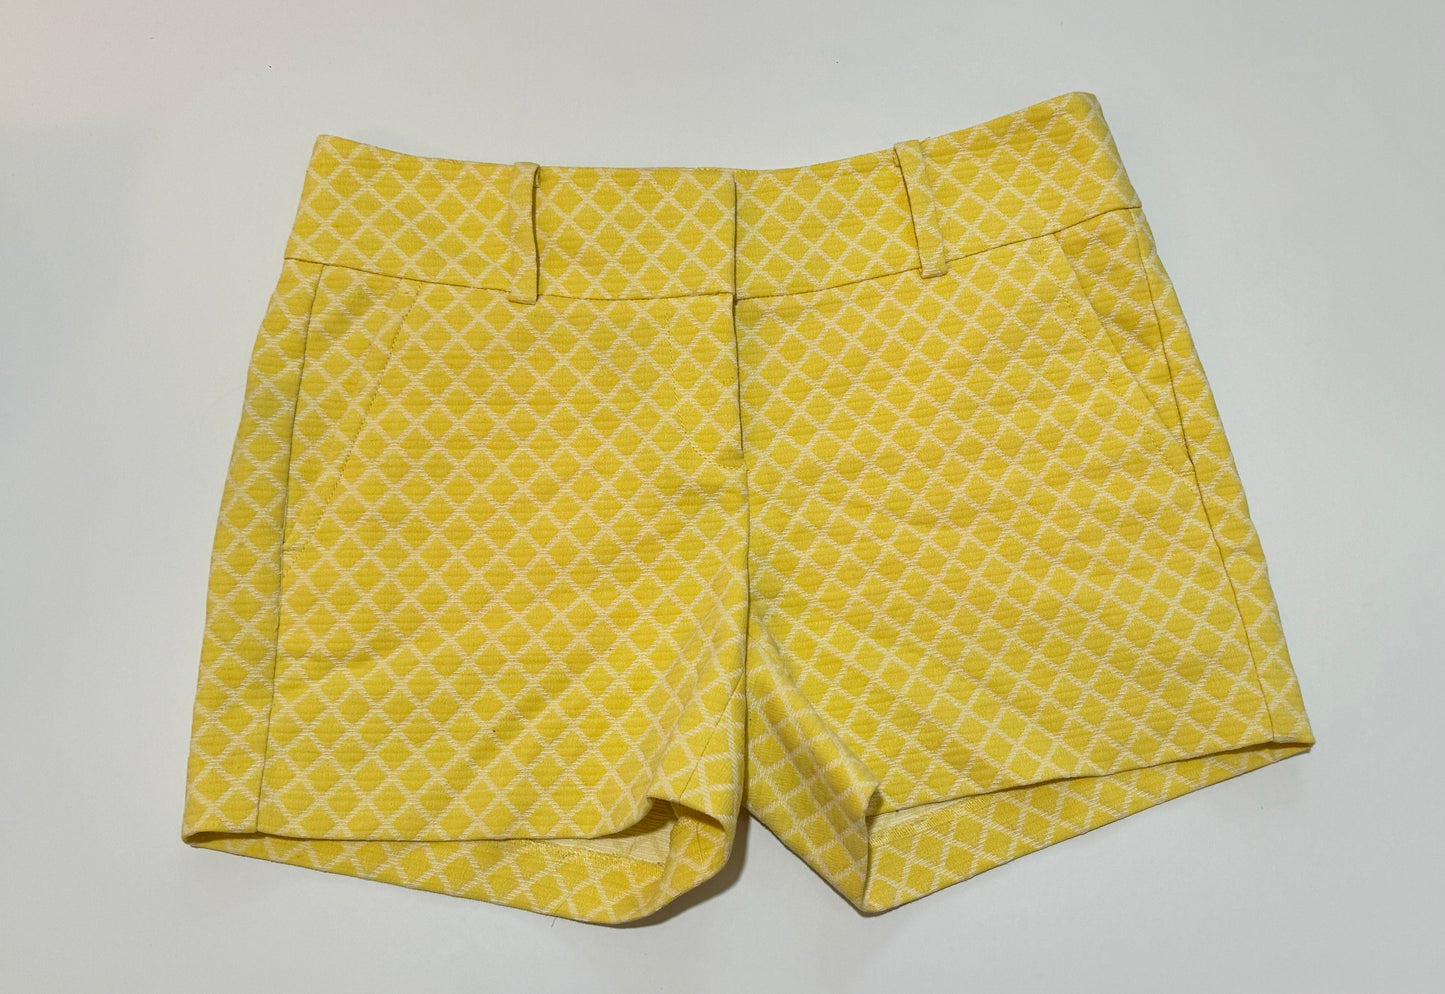 2 Women’s Ann Taylor Loft Yellow Shorts